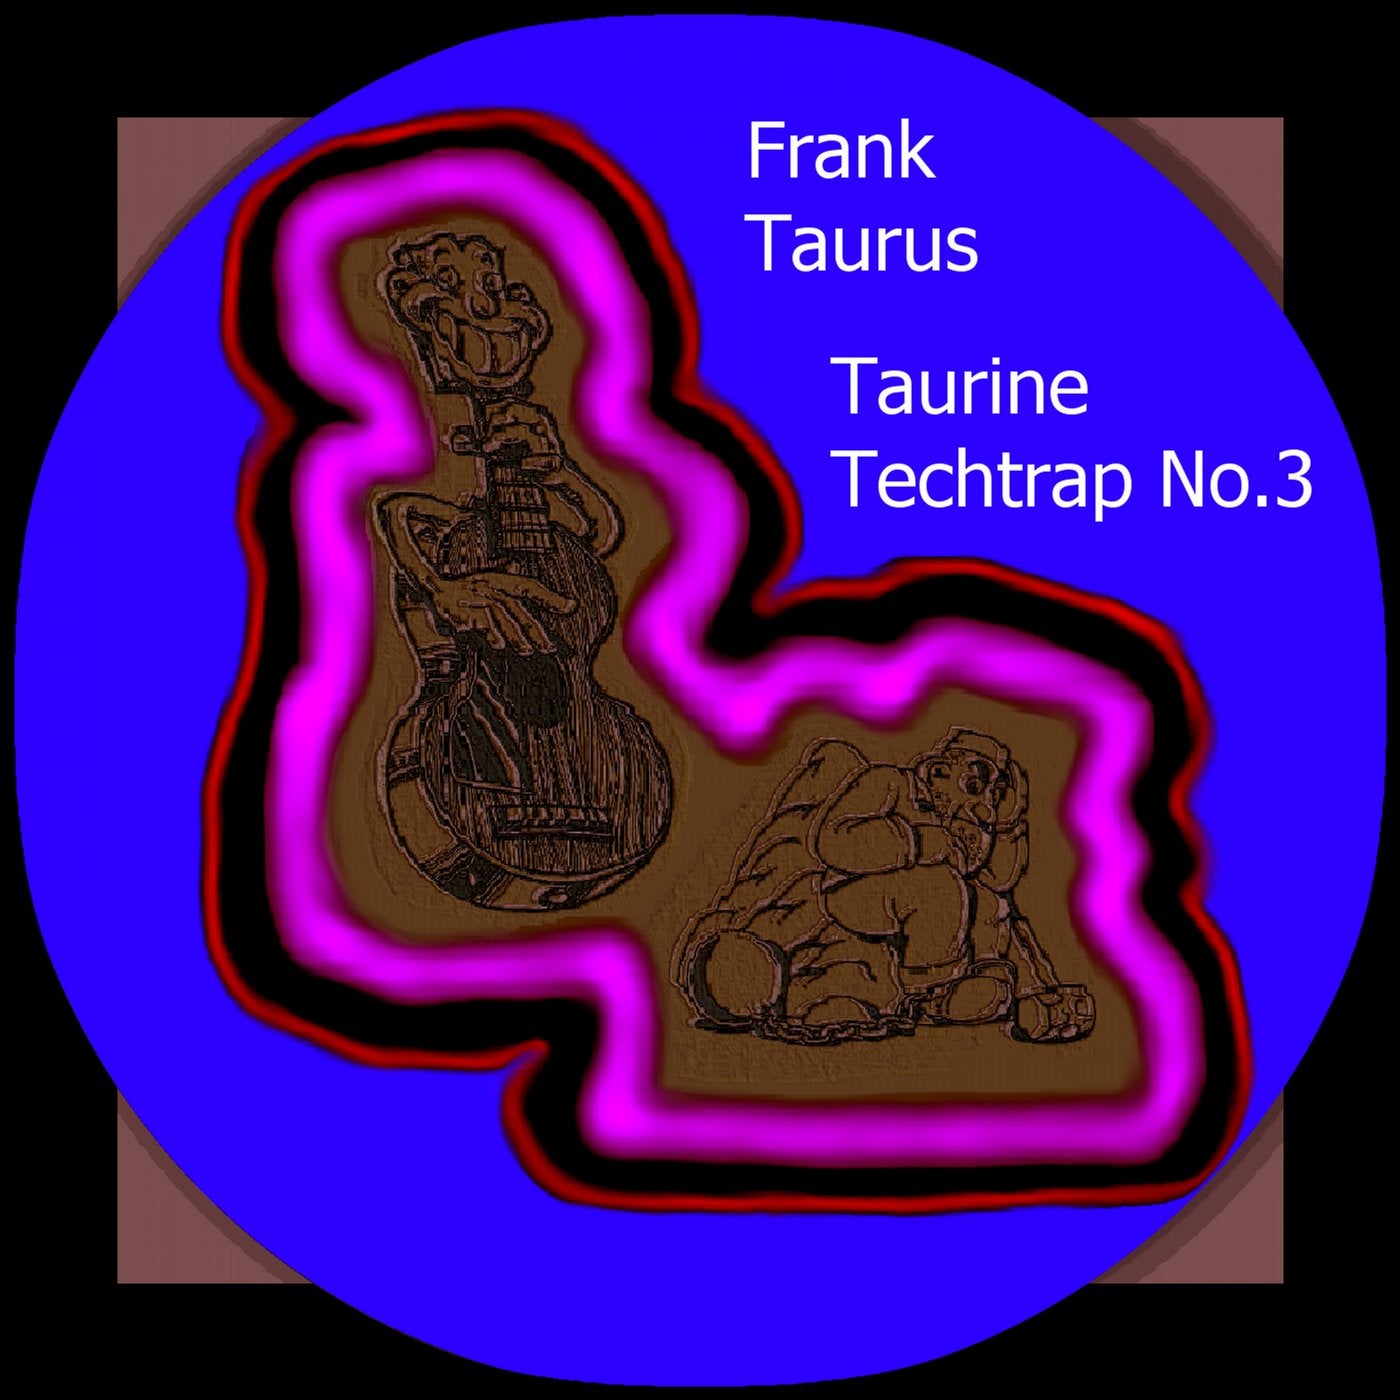 Taurine Techtrap No. 3